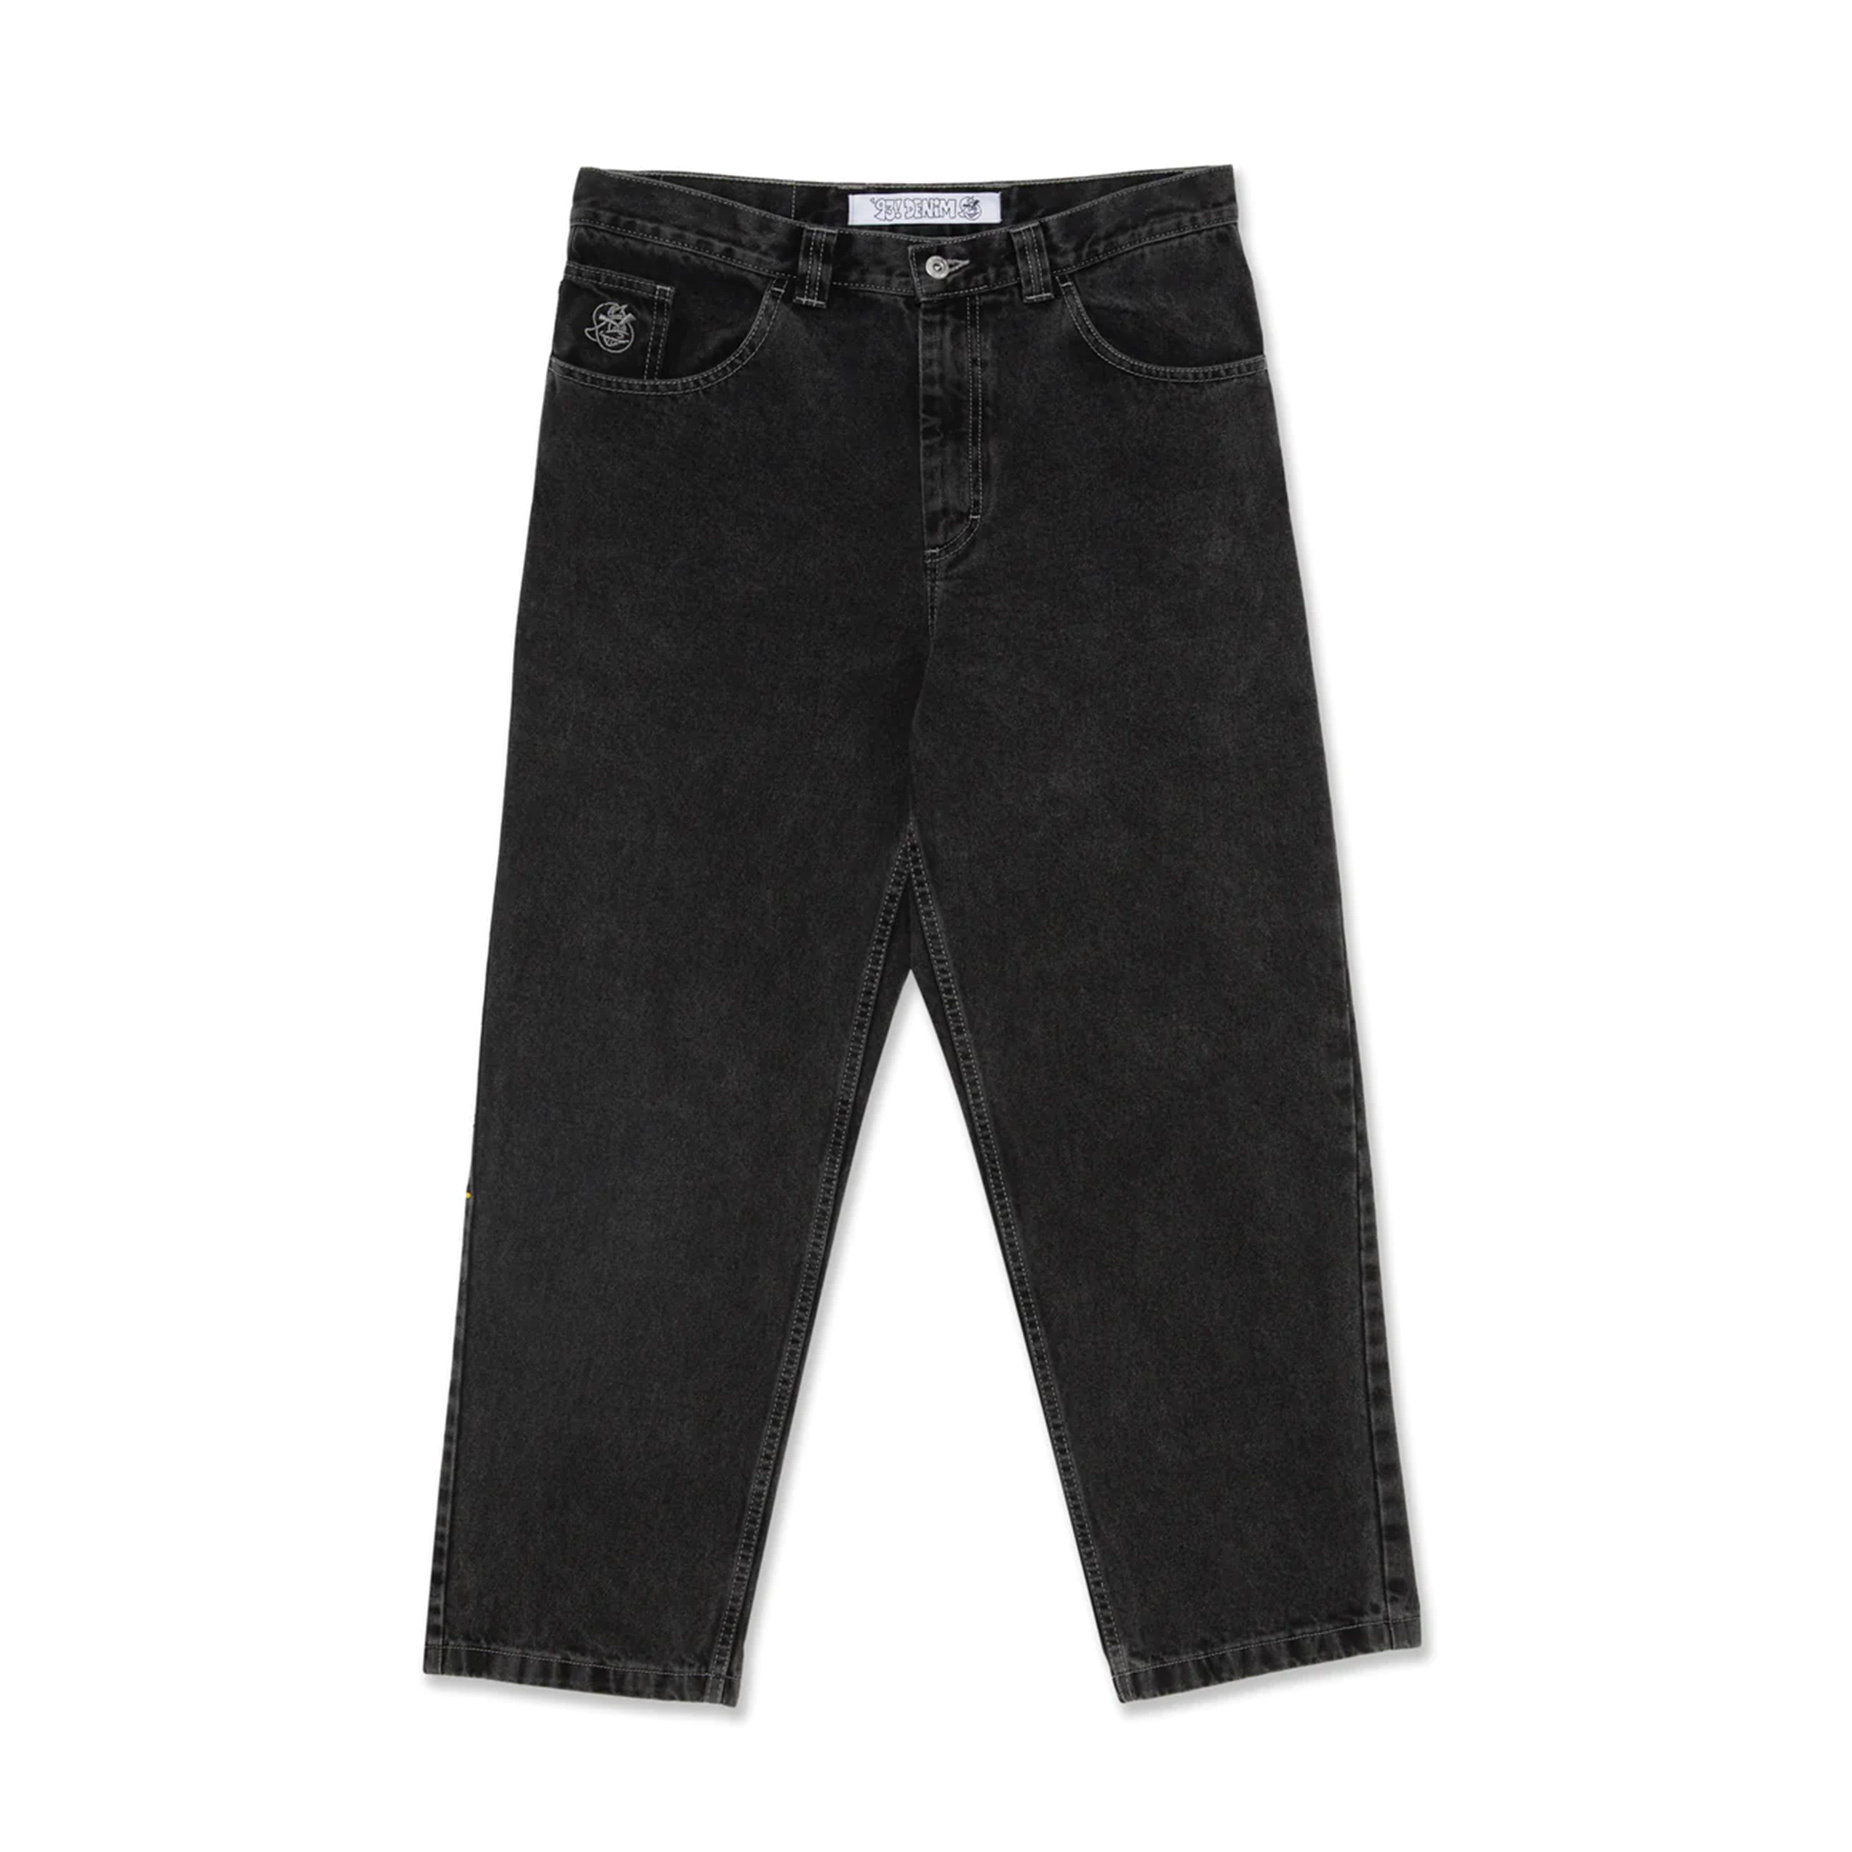 Polar 93 Denim Jeans - Silver/Black | BOARDWORLD Store